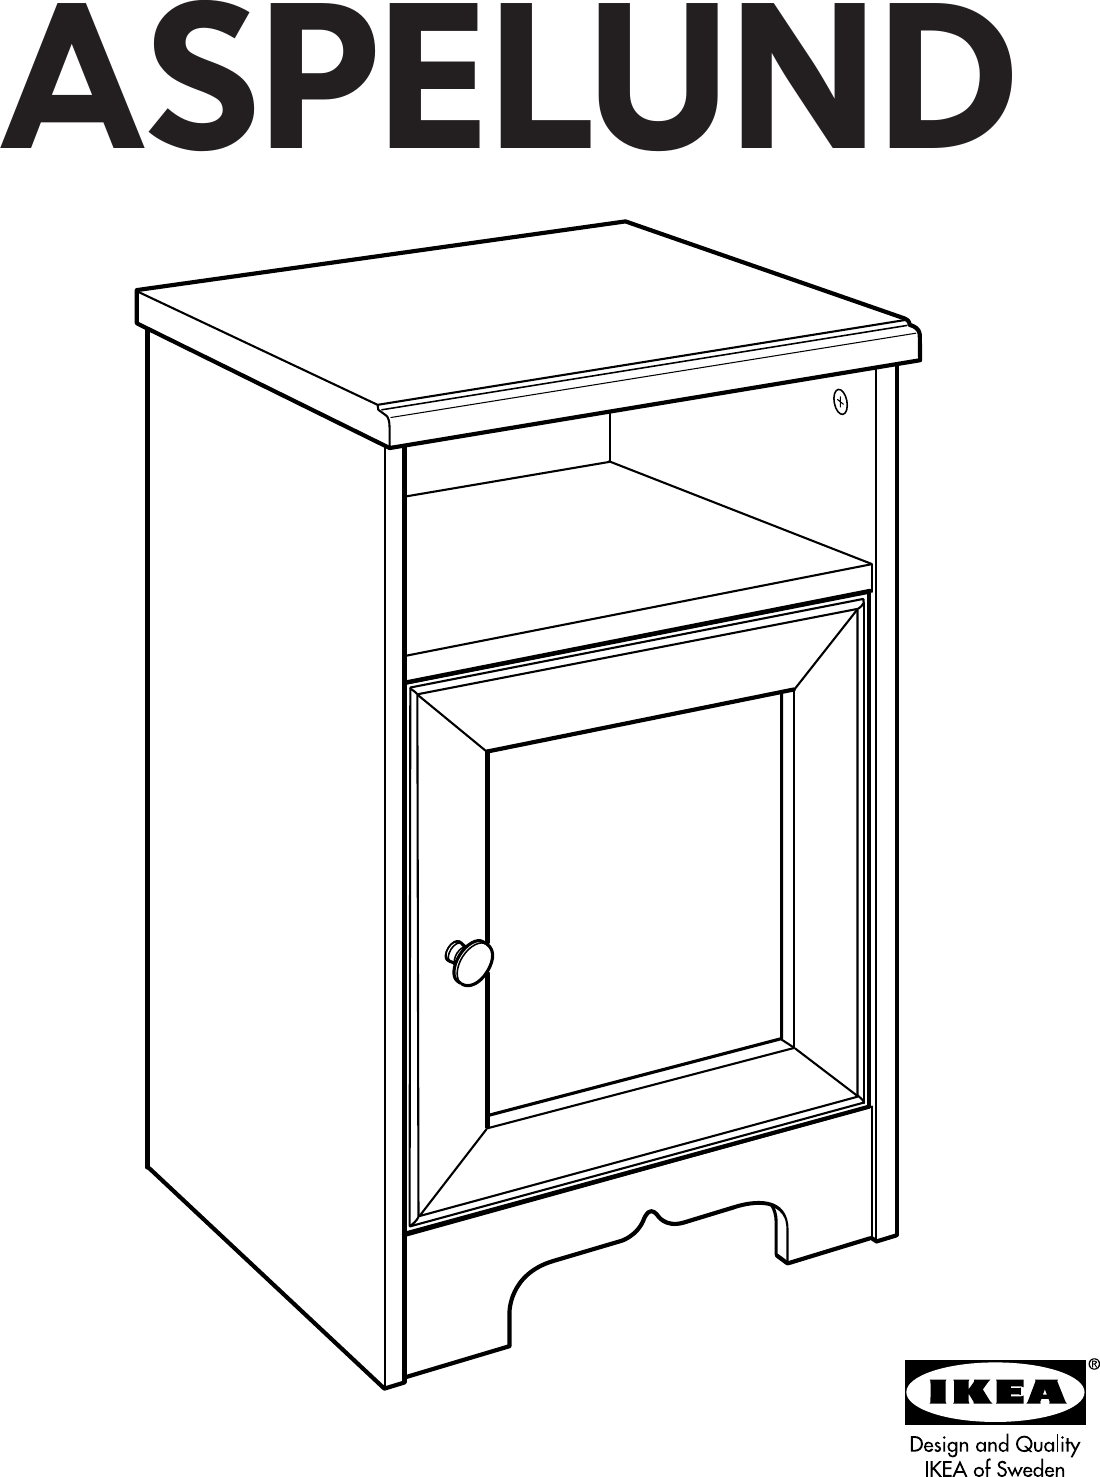 Ikea Aspelund Bedside Table 14x14 Assembly Instruction